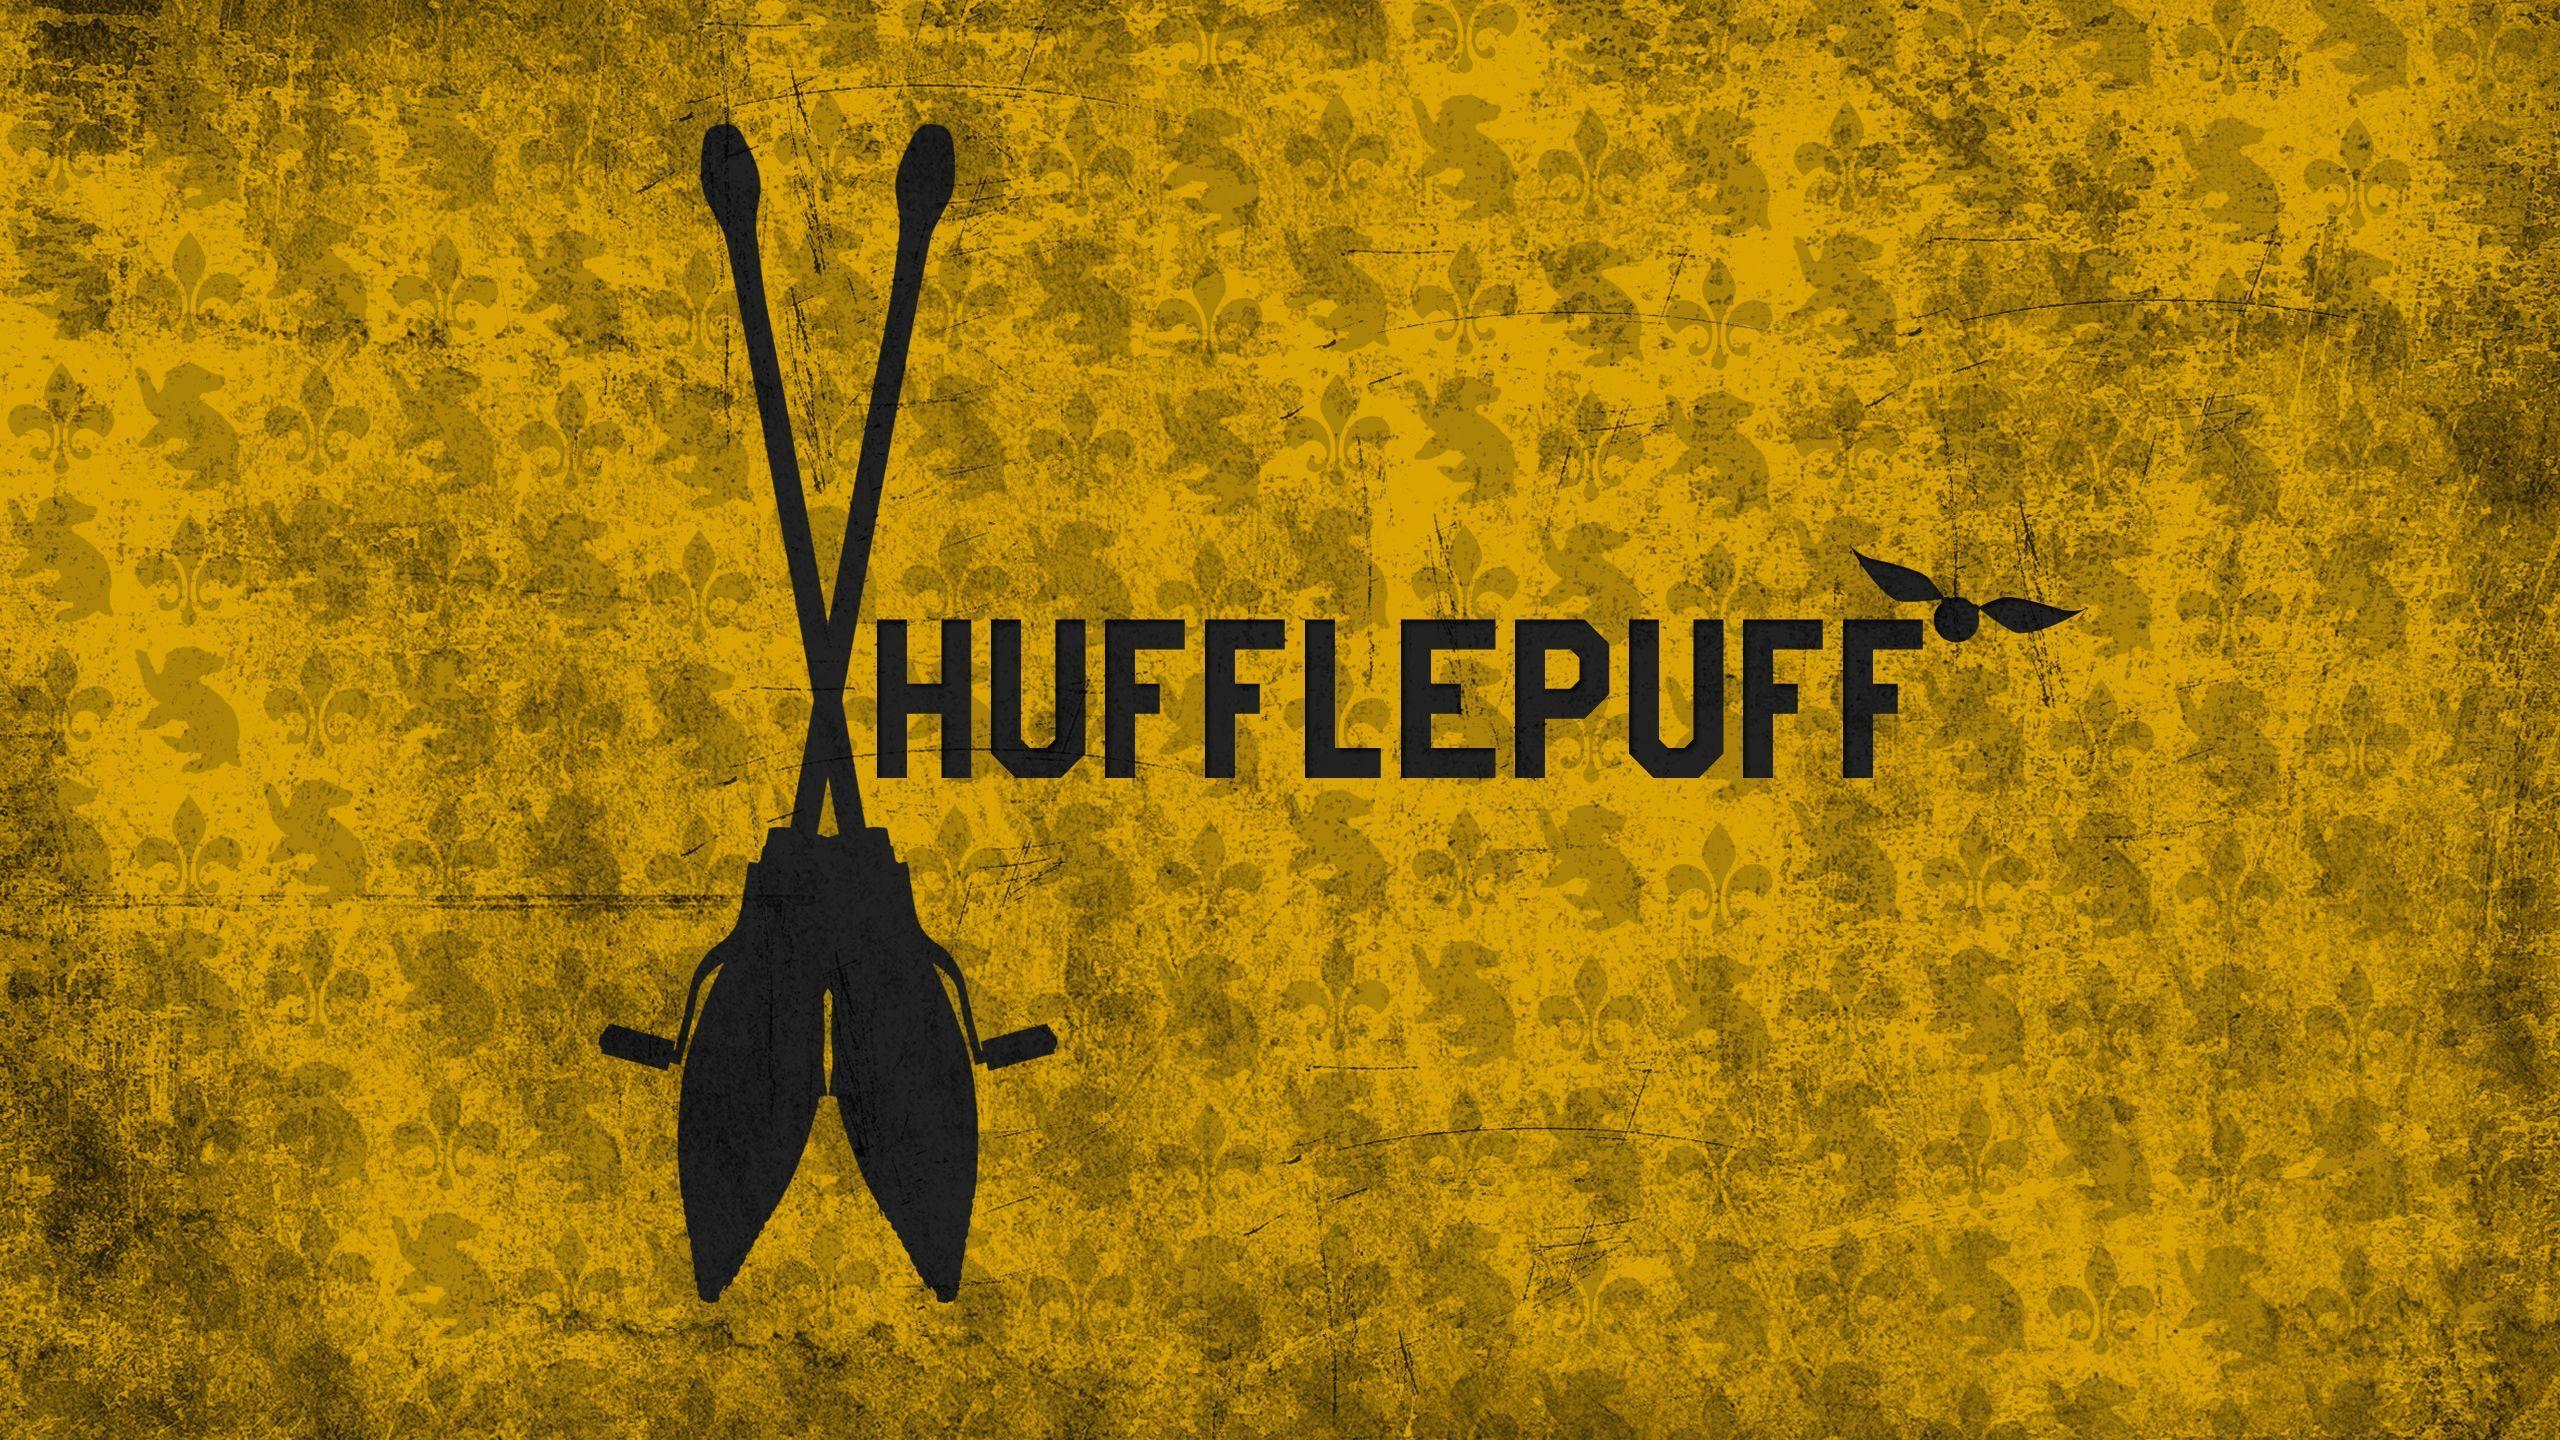 Hufflepuff Wallpapers - Wallpaper Cave